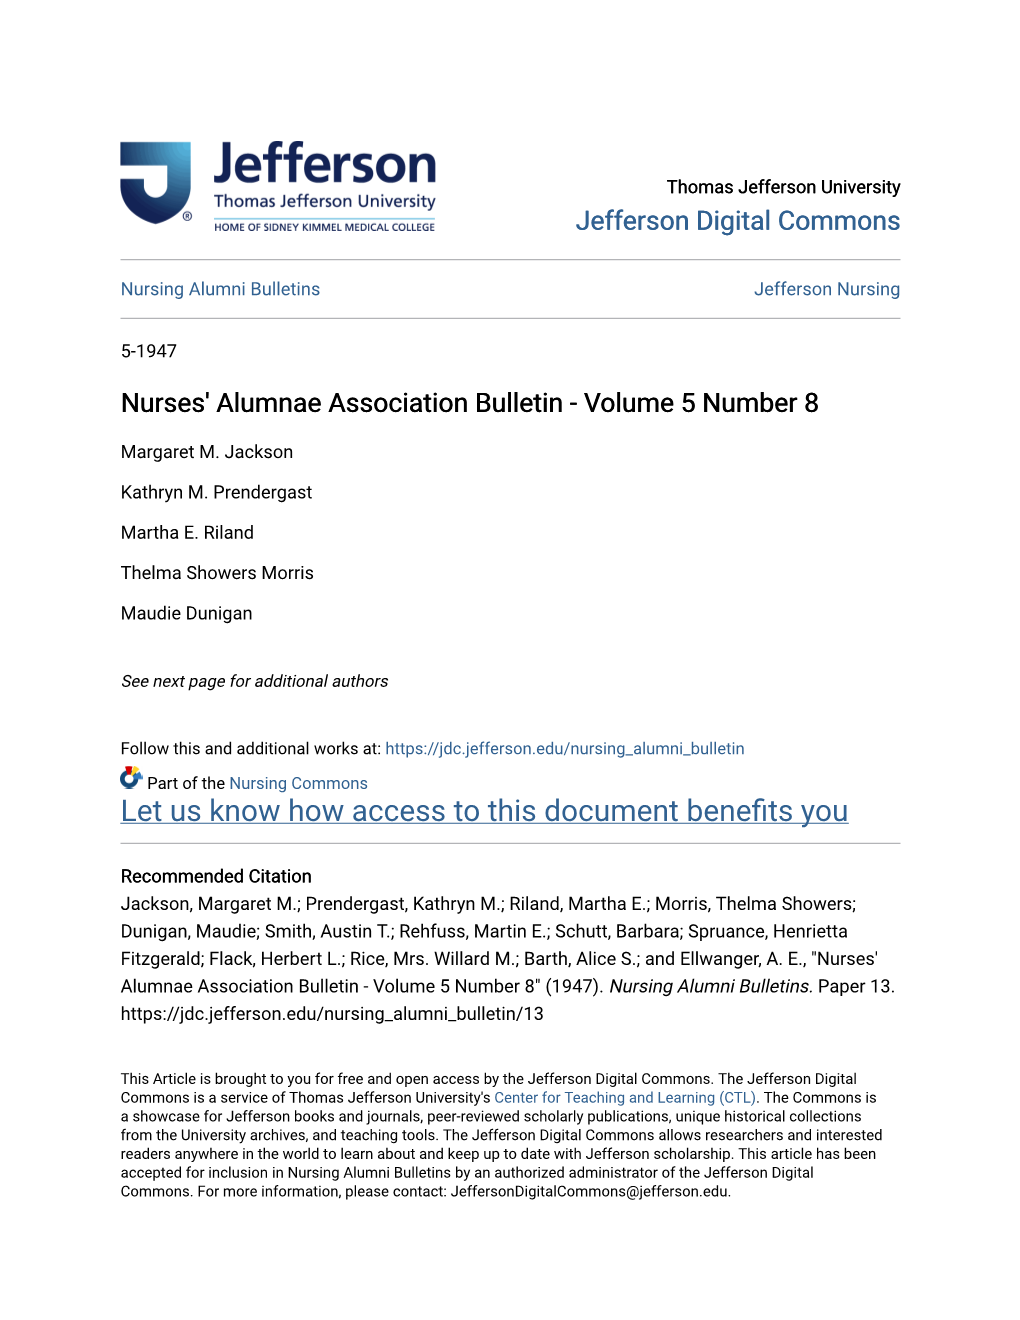 Nurses' Alumnae Association Bulletin - Volume 5 Number 8